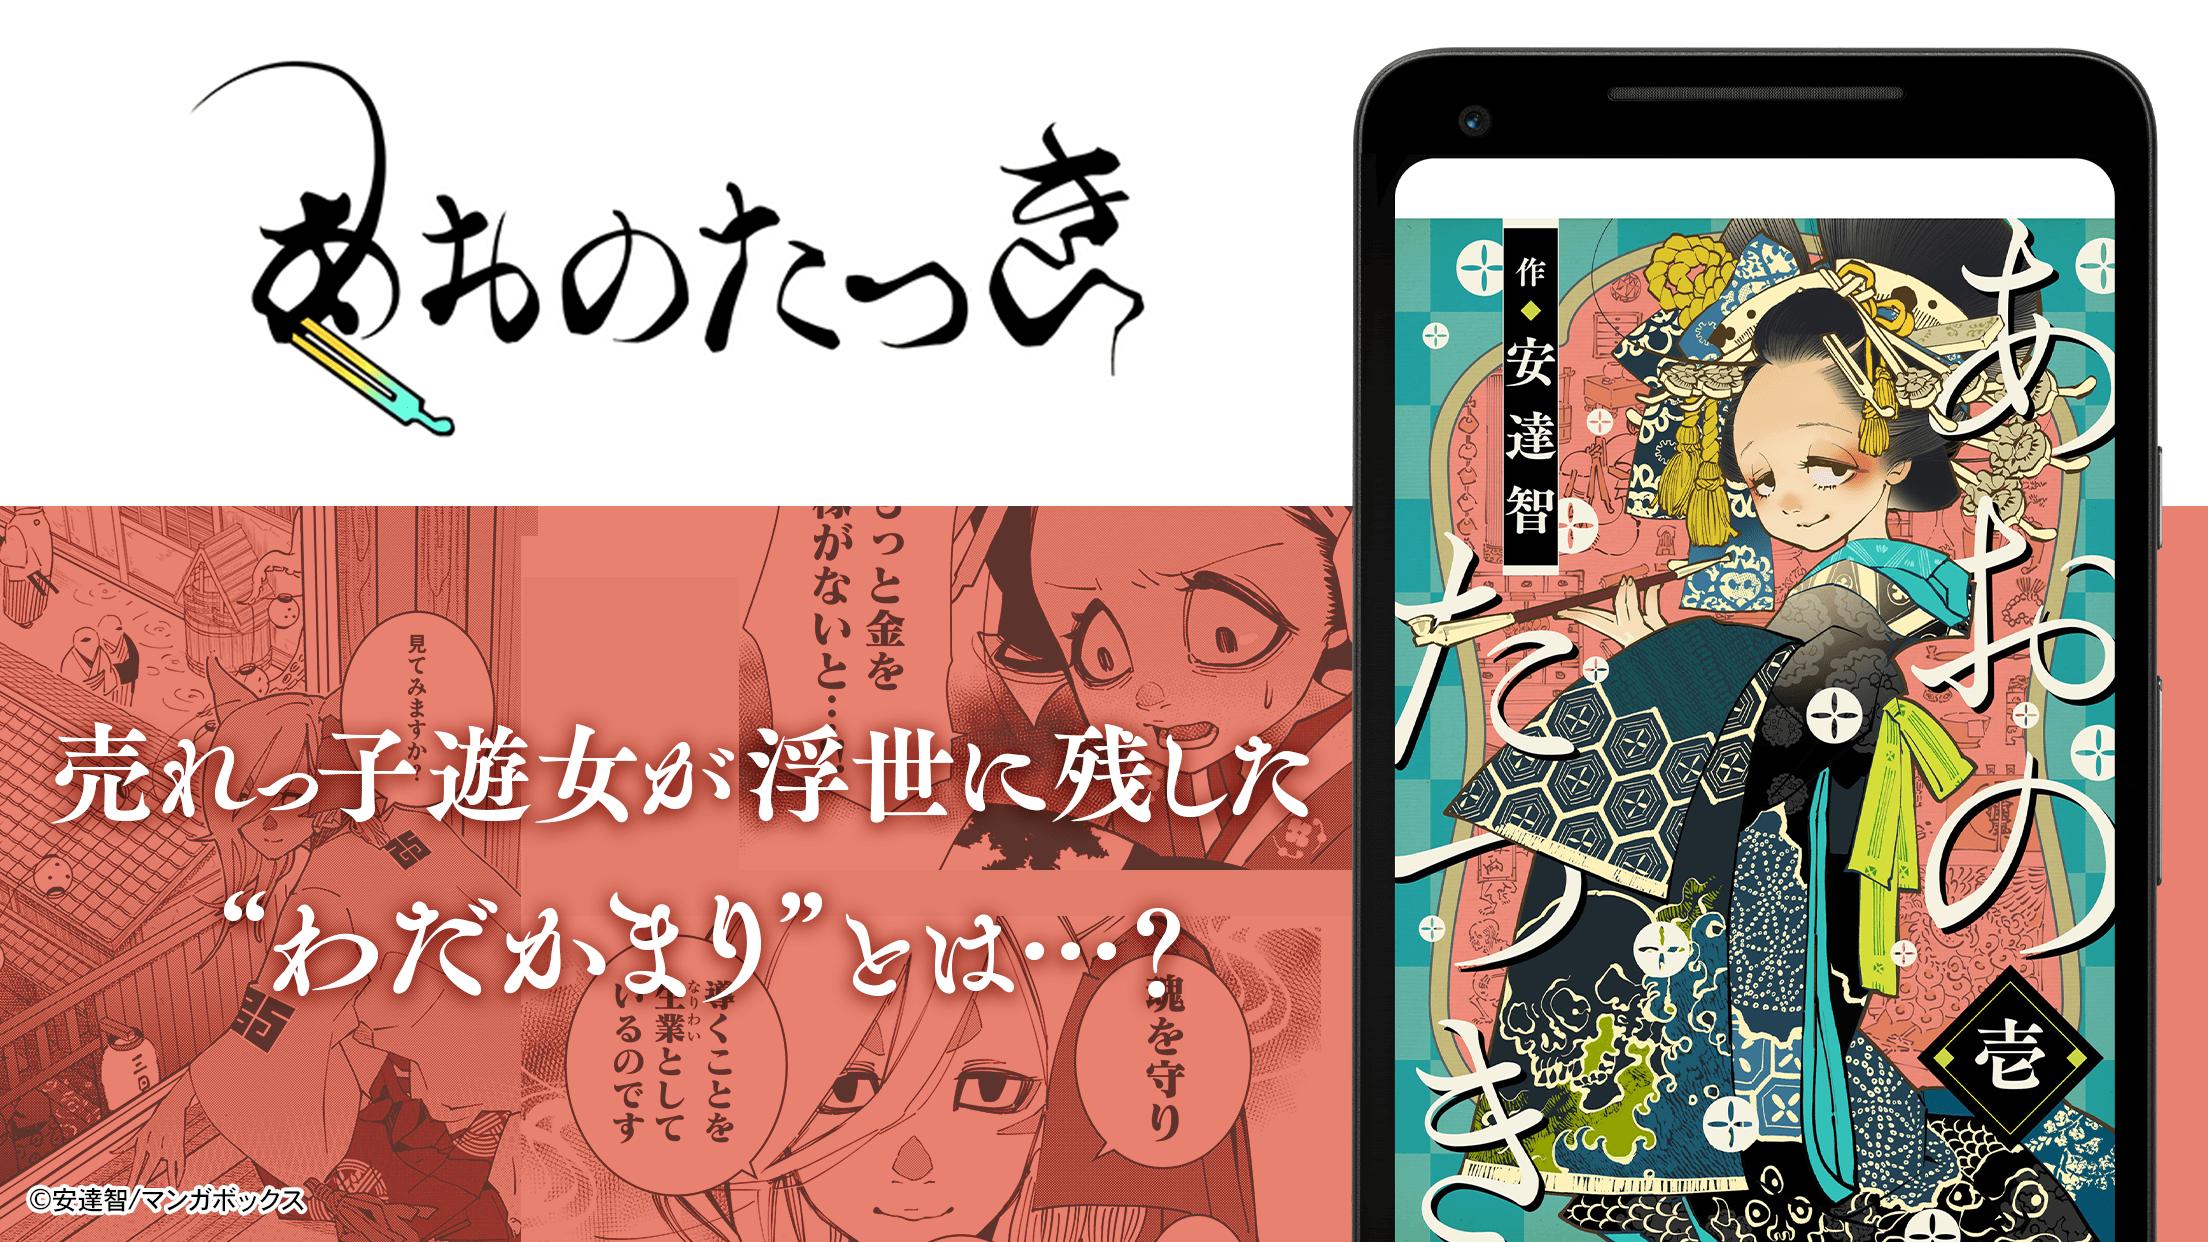 Manga Box: Manga App 2.4.9 Screenshot 6